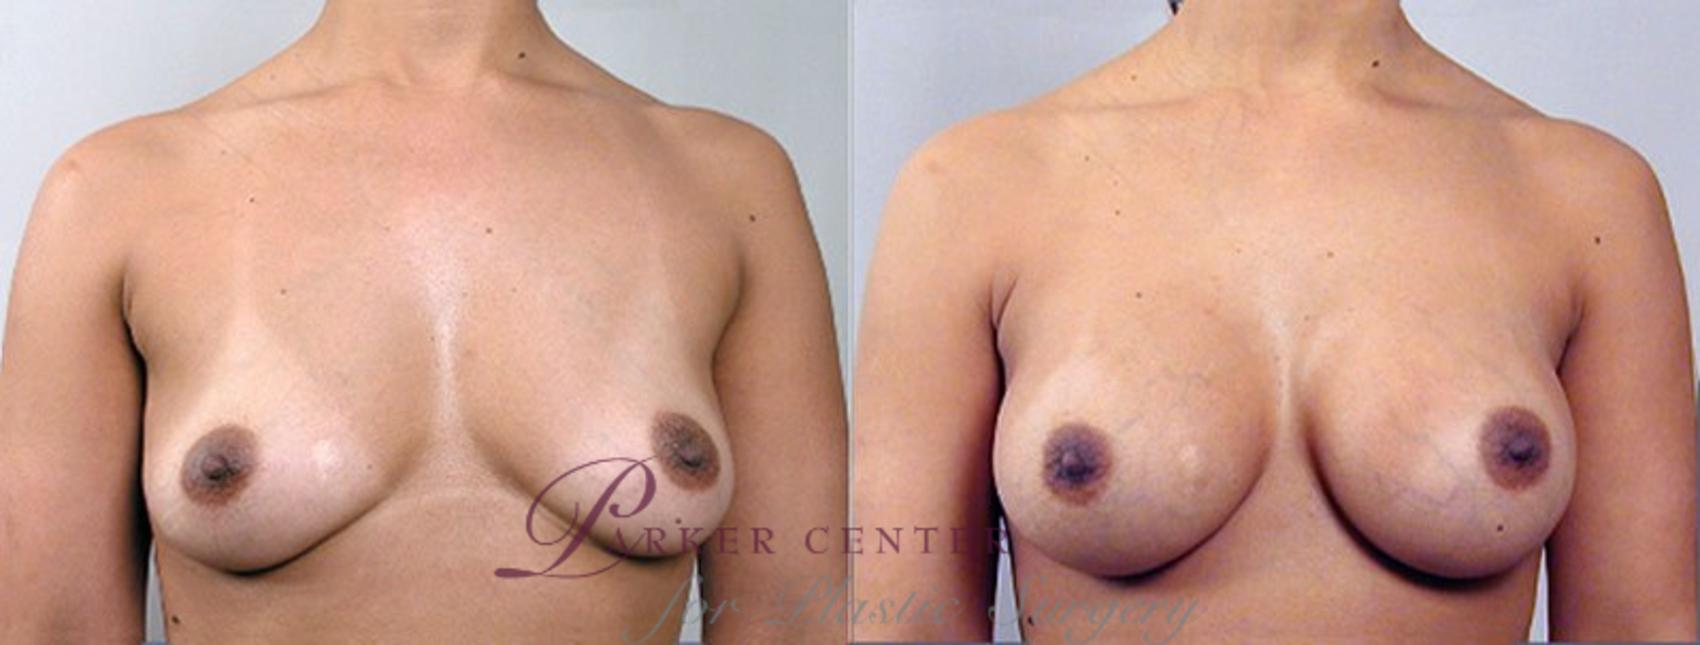 Breast Augmentation Case 351 Before & After View #1 | Paramus, NJ | Parker Center for Plastic Surgery